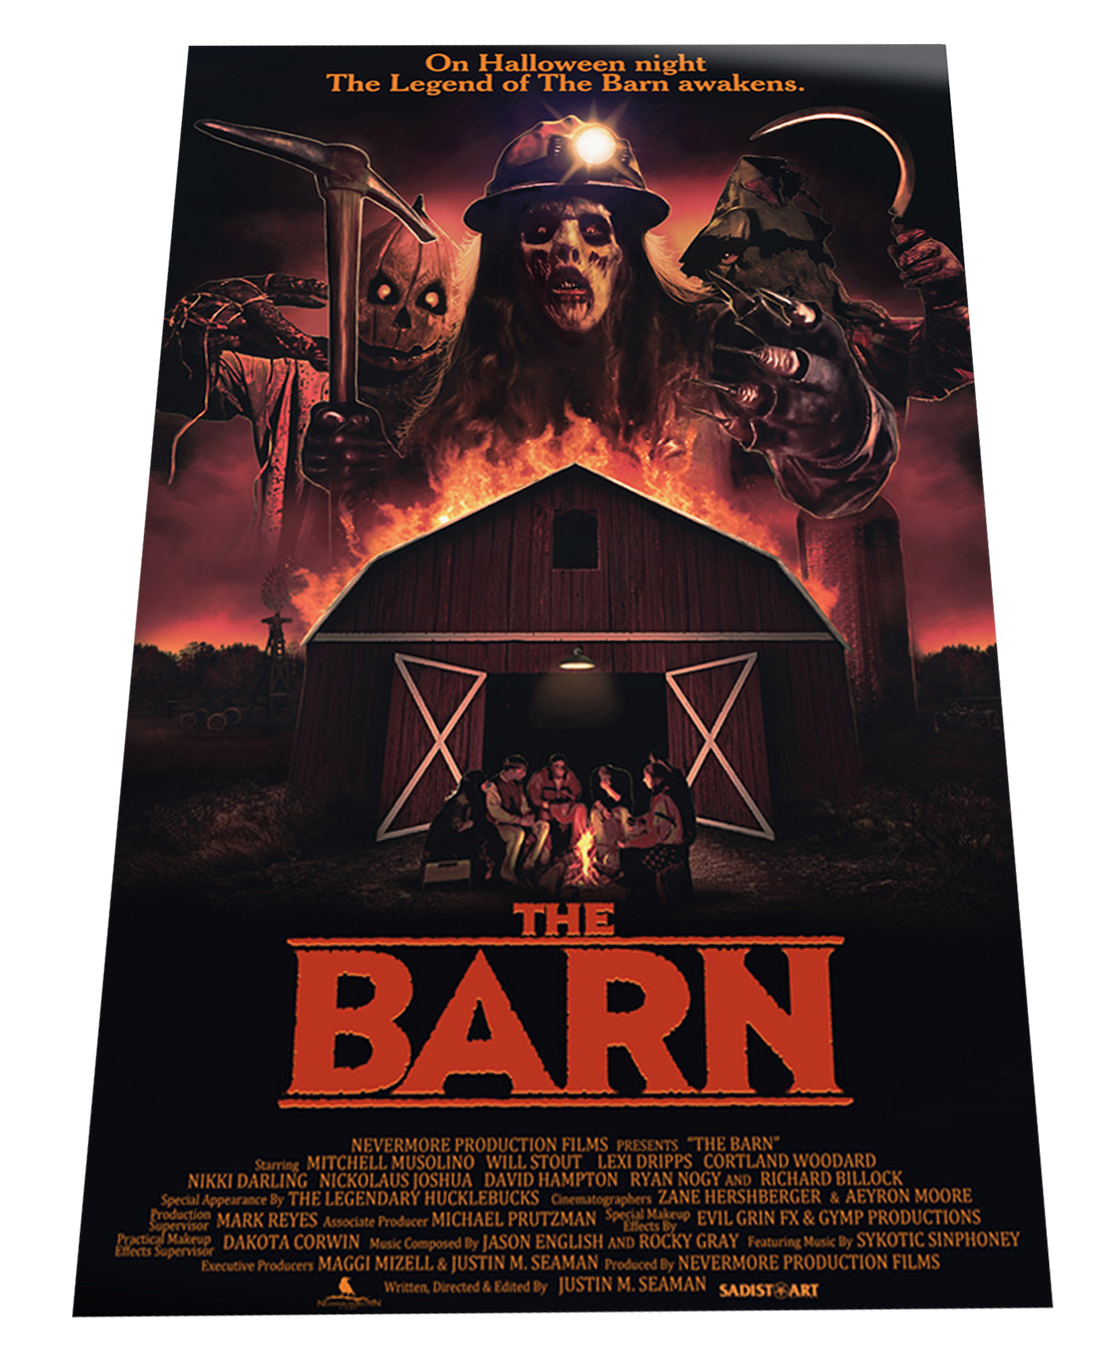 The Barn - Poster - Sadist Art Designs Poster (11x17)